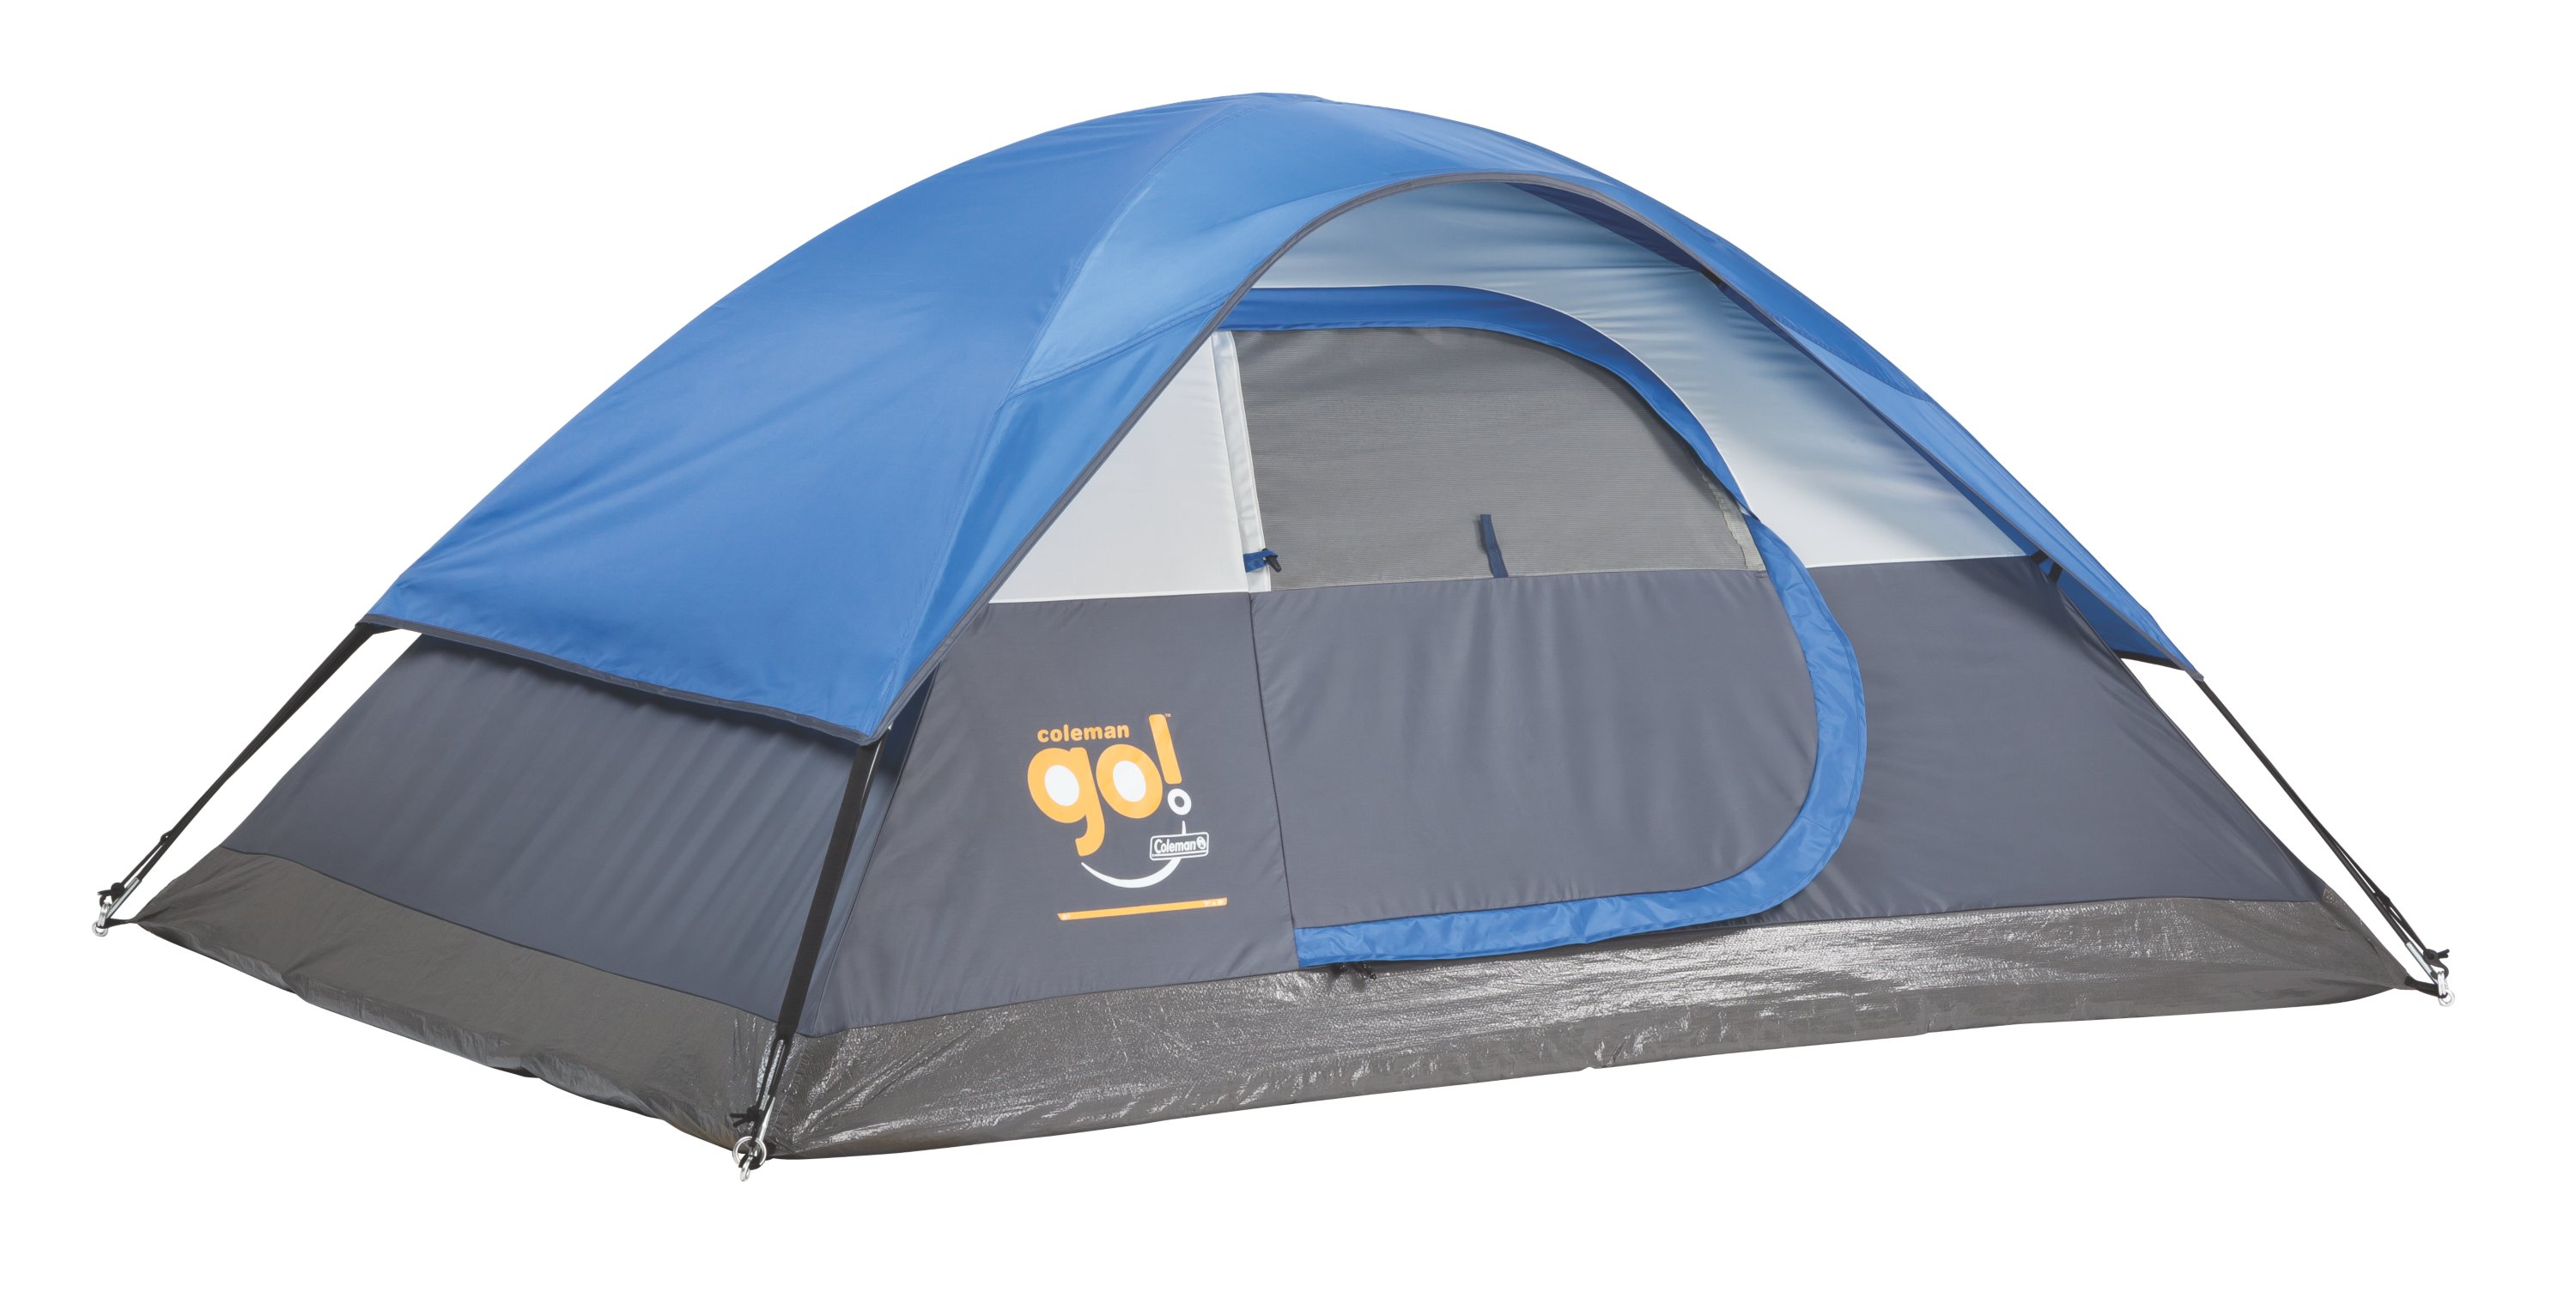 2-Person Go! Dome Camping Tent